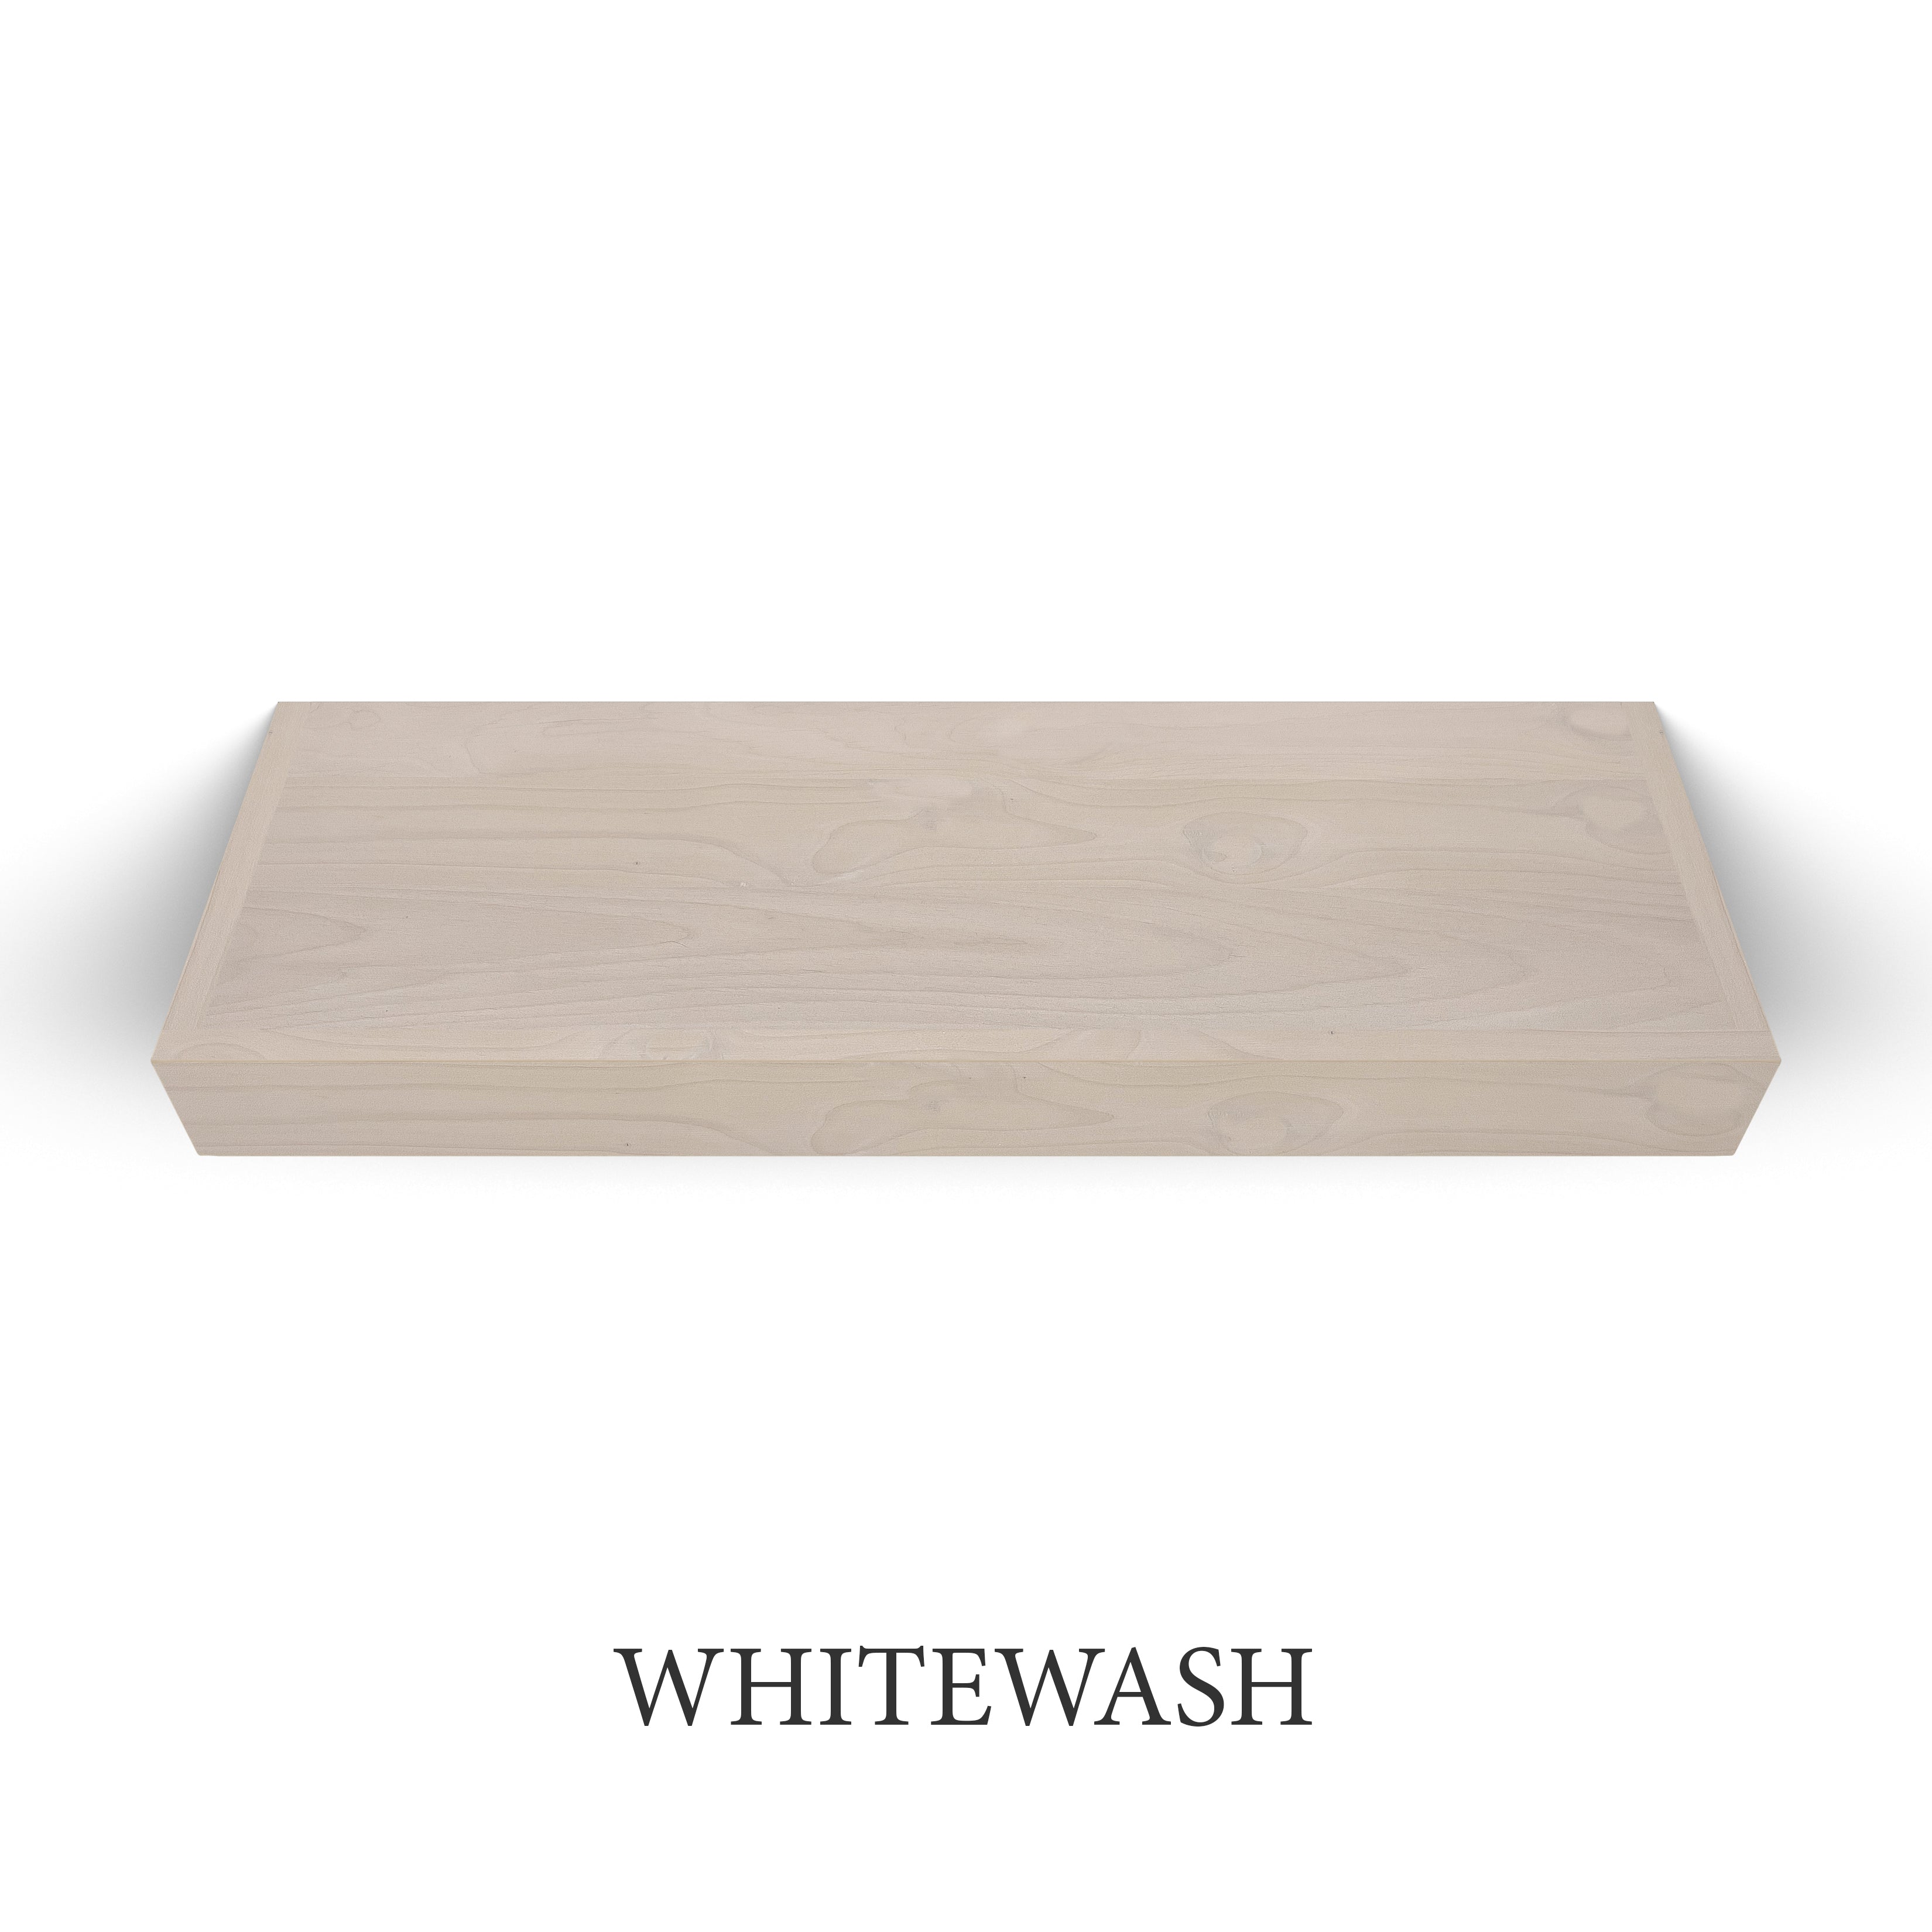 whitewash Superior Alder 3 Inch Thick Floating Shelf